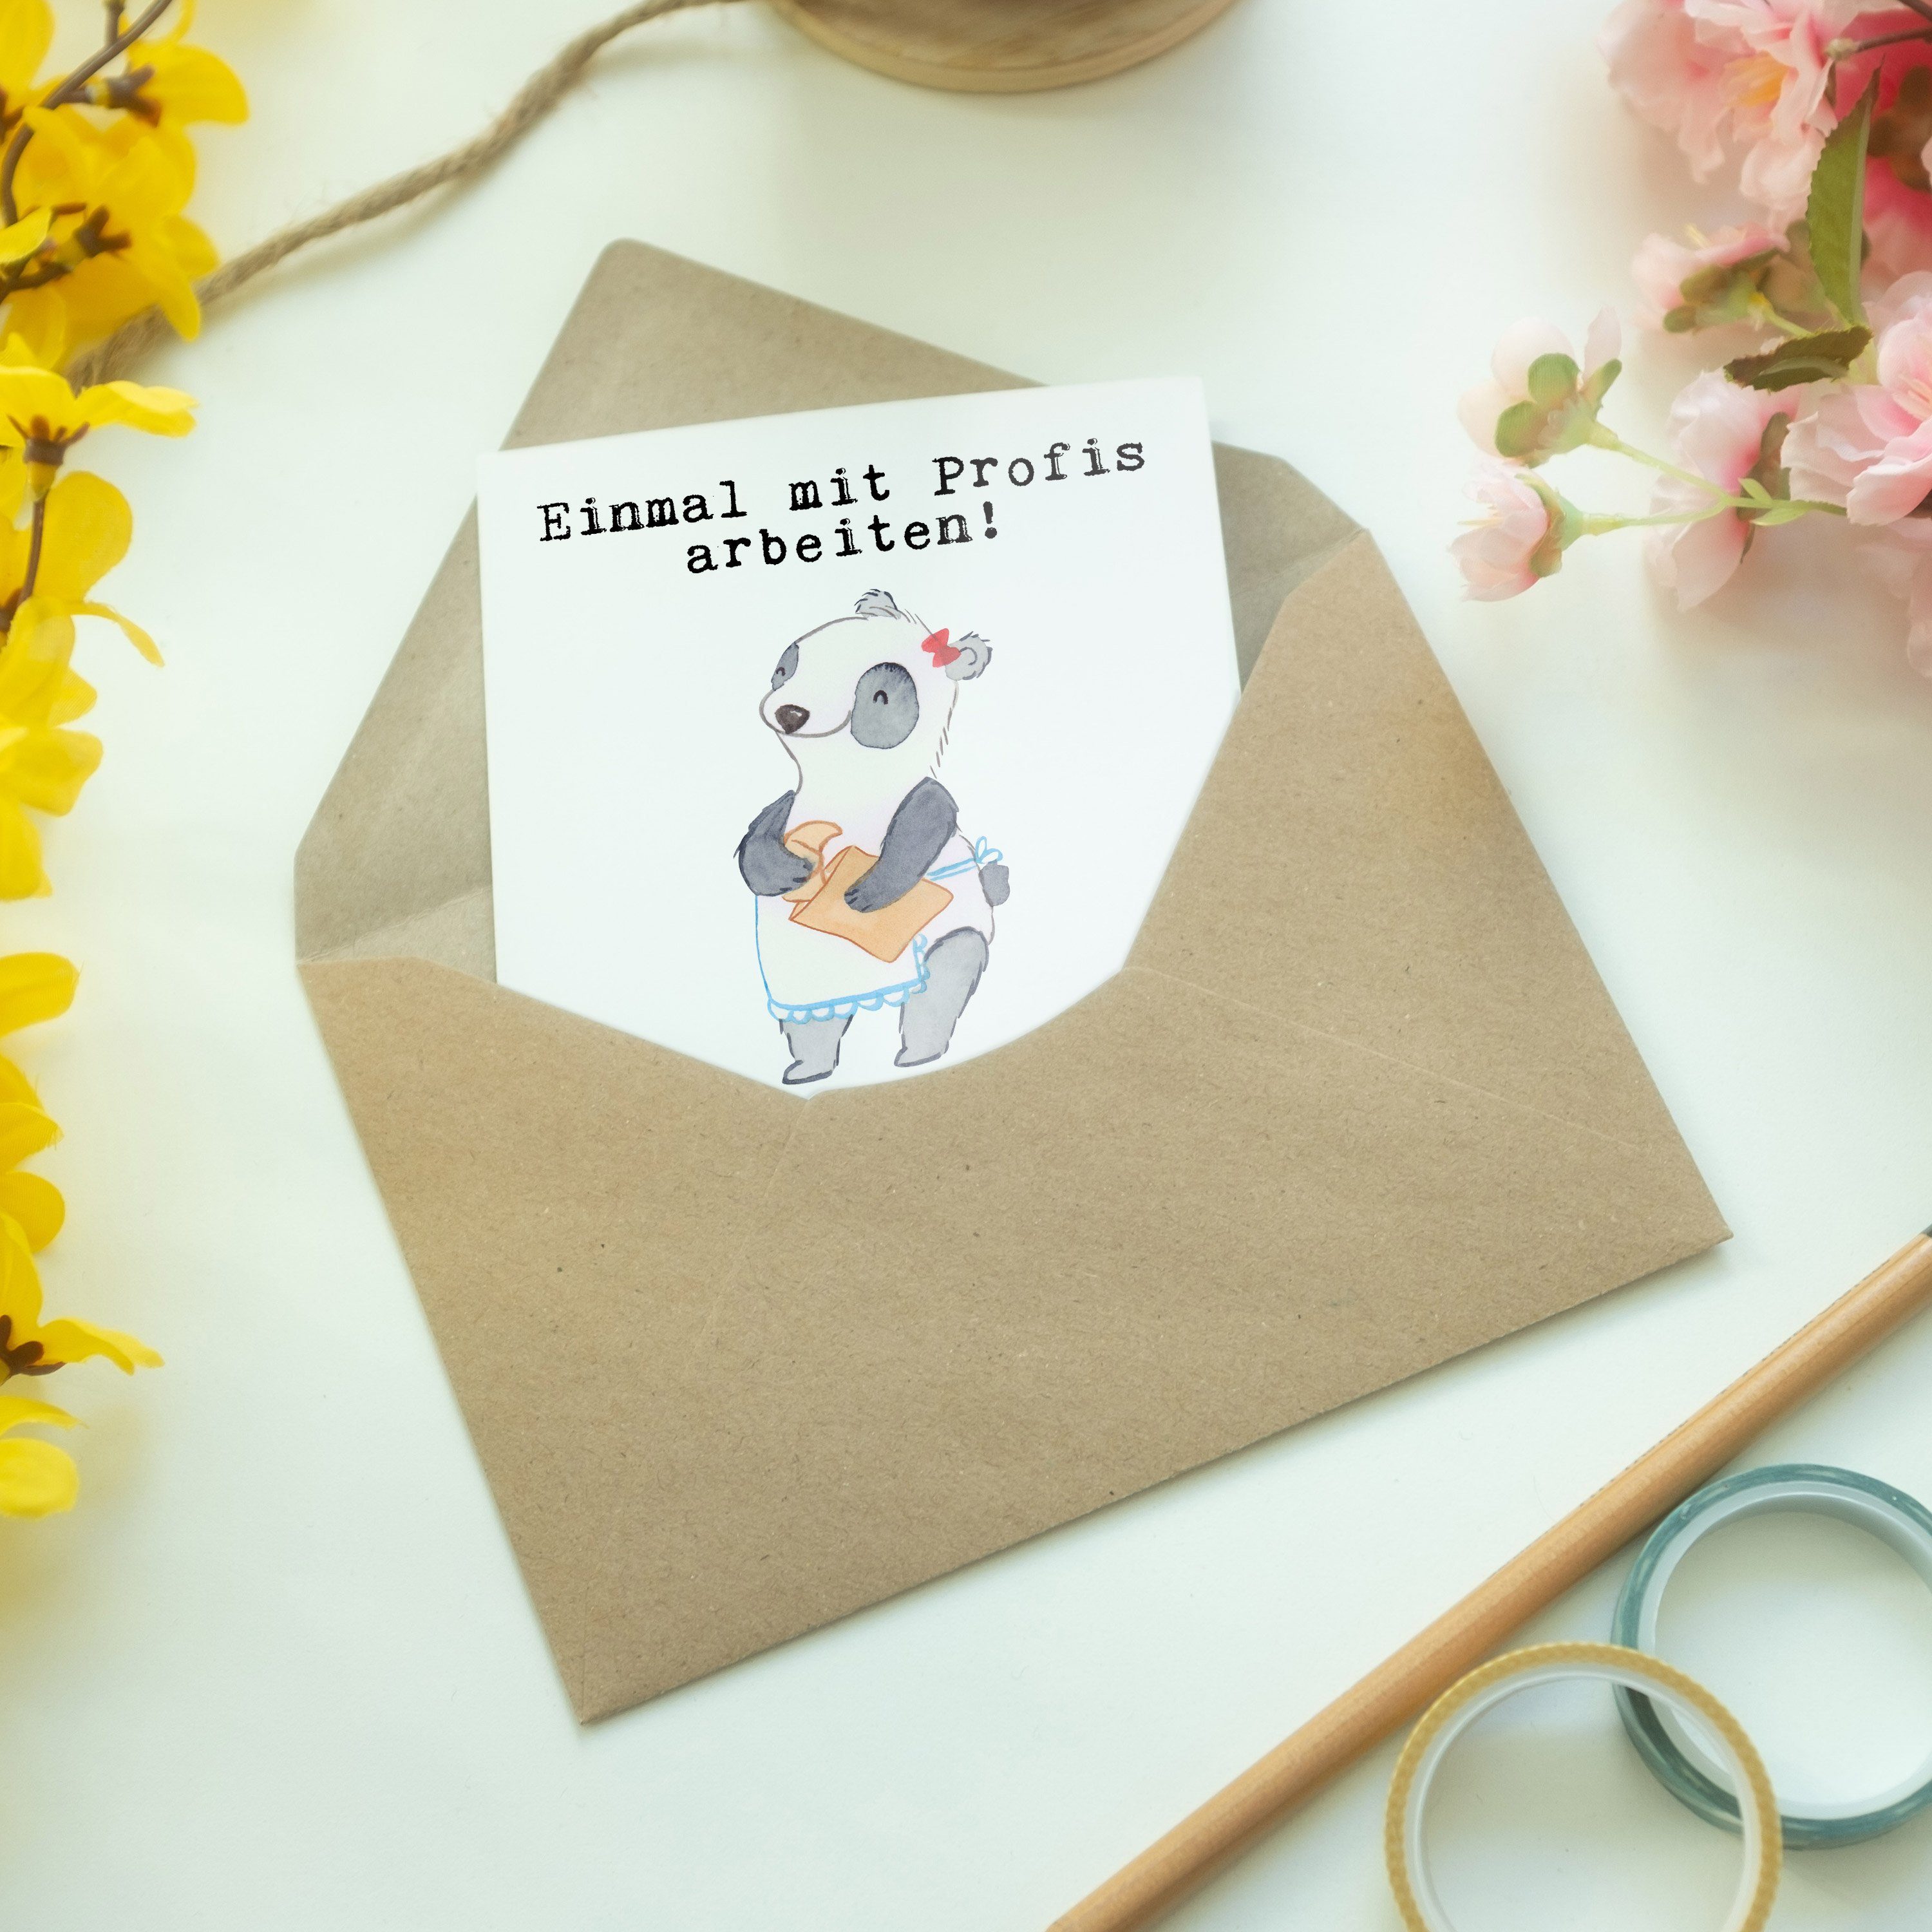 Weiß Panda - Grußkarte & Geschenk, aus Leidenschaft Mr. Bäckereifachverkäuferin - Mrs. Klappkart